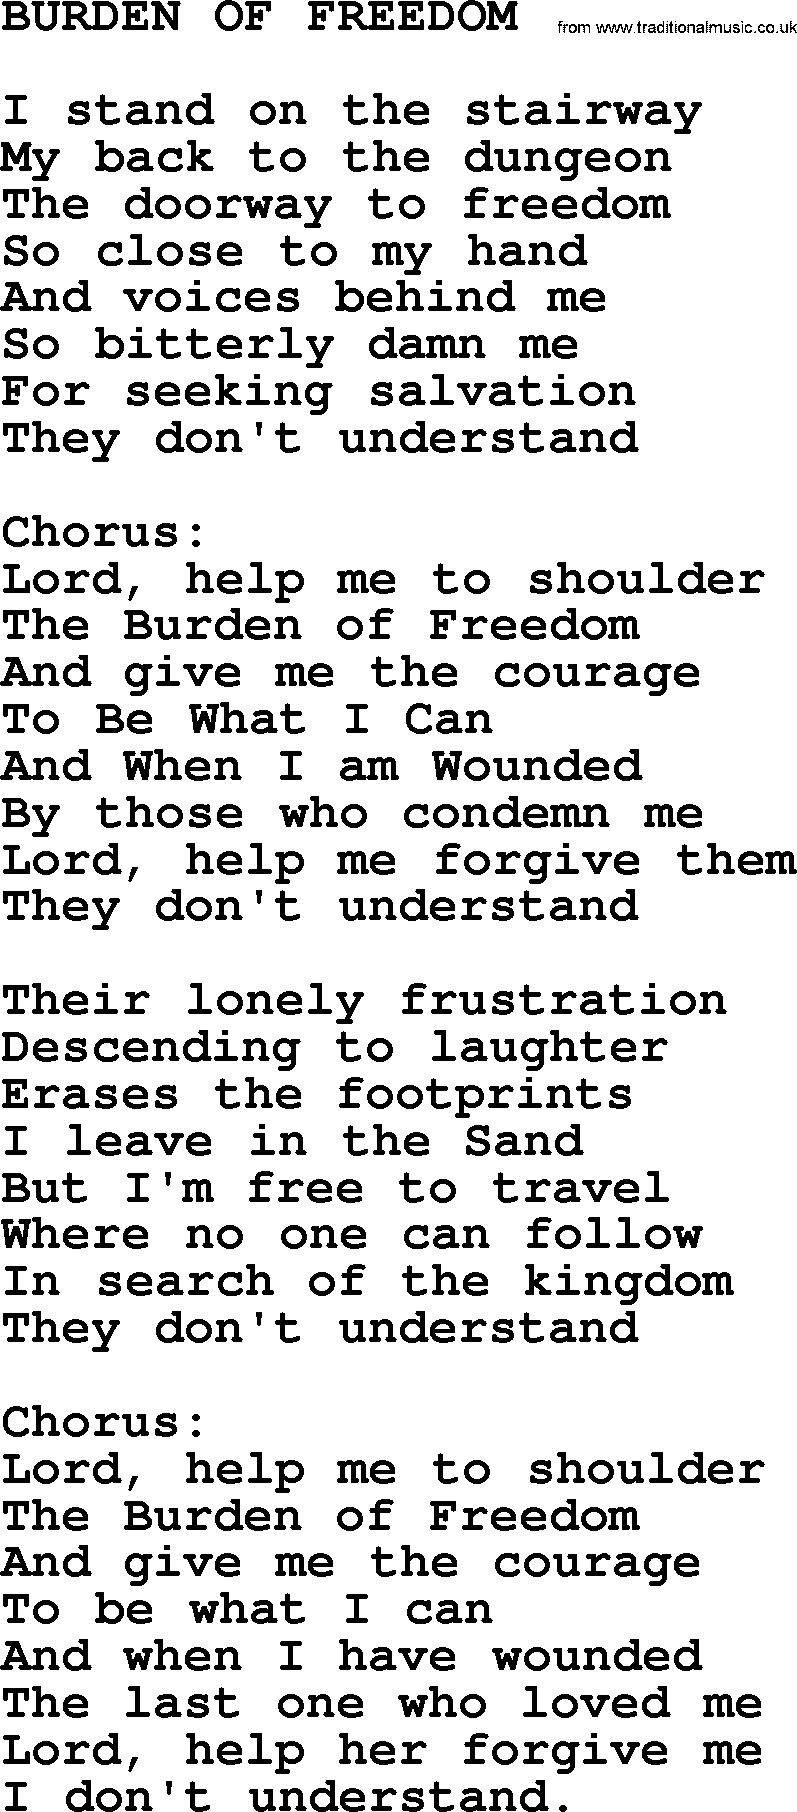 Kris Kristofferson song: Burden Of Freedom lyrics